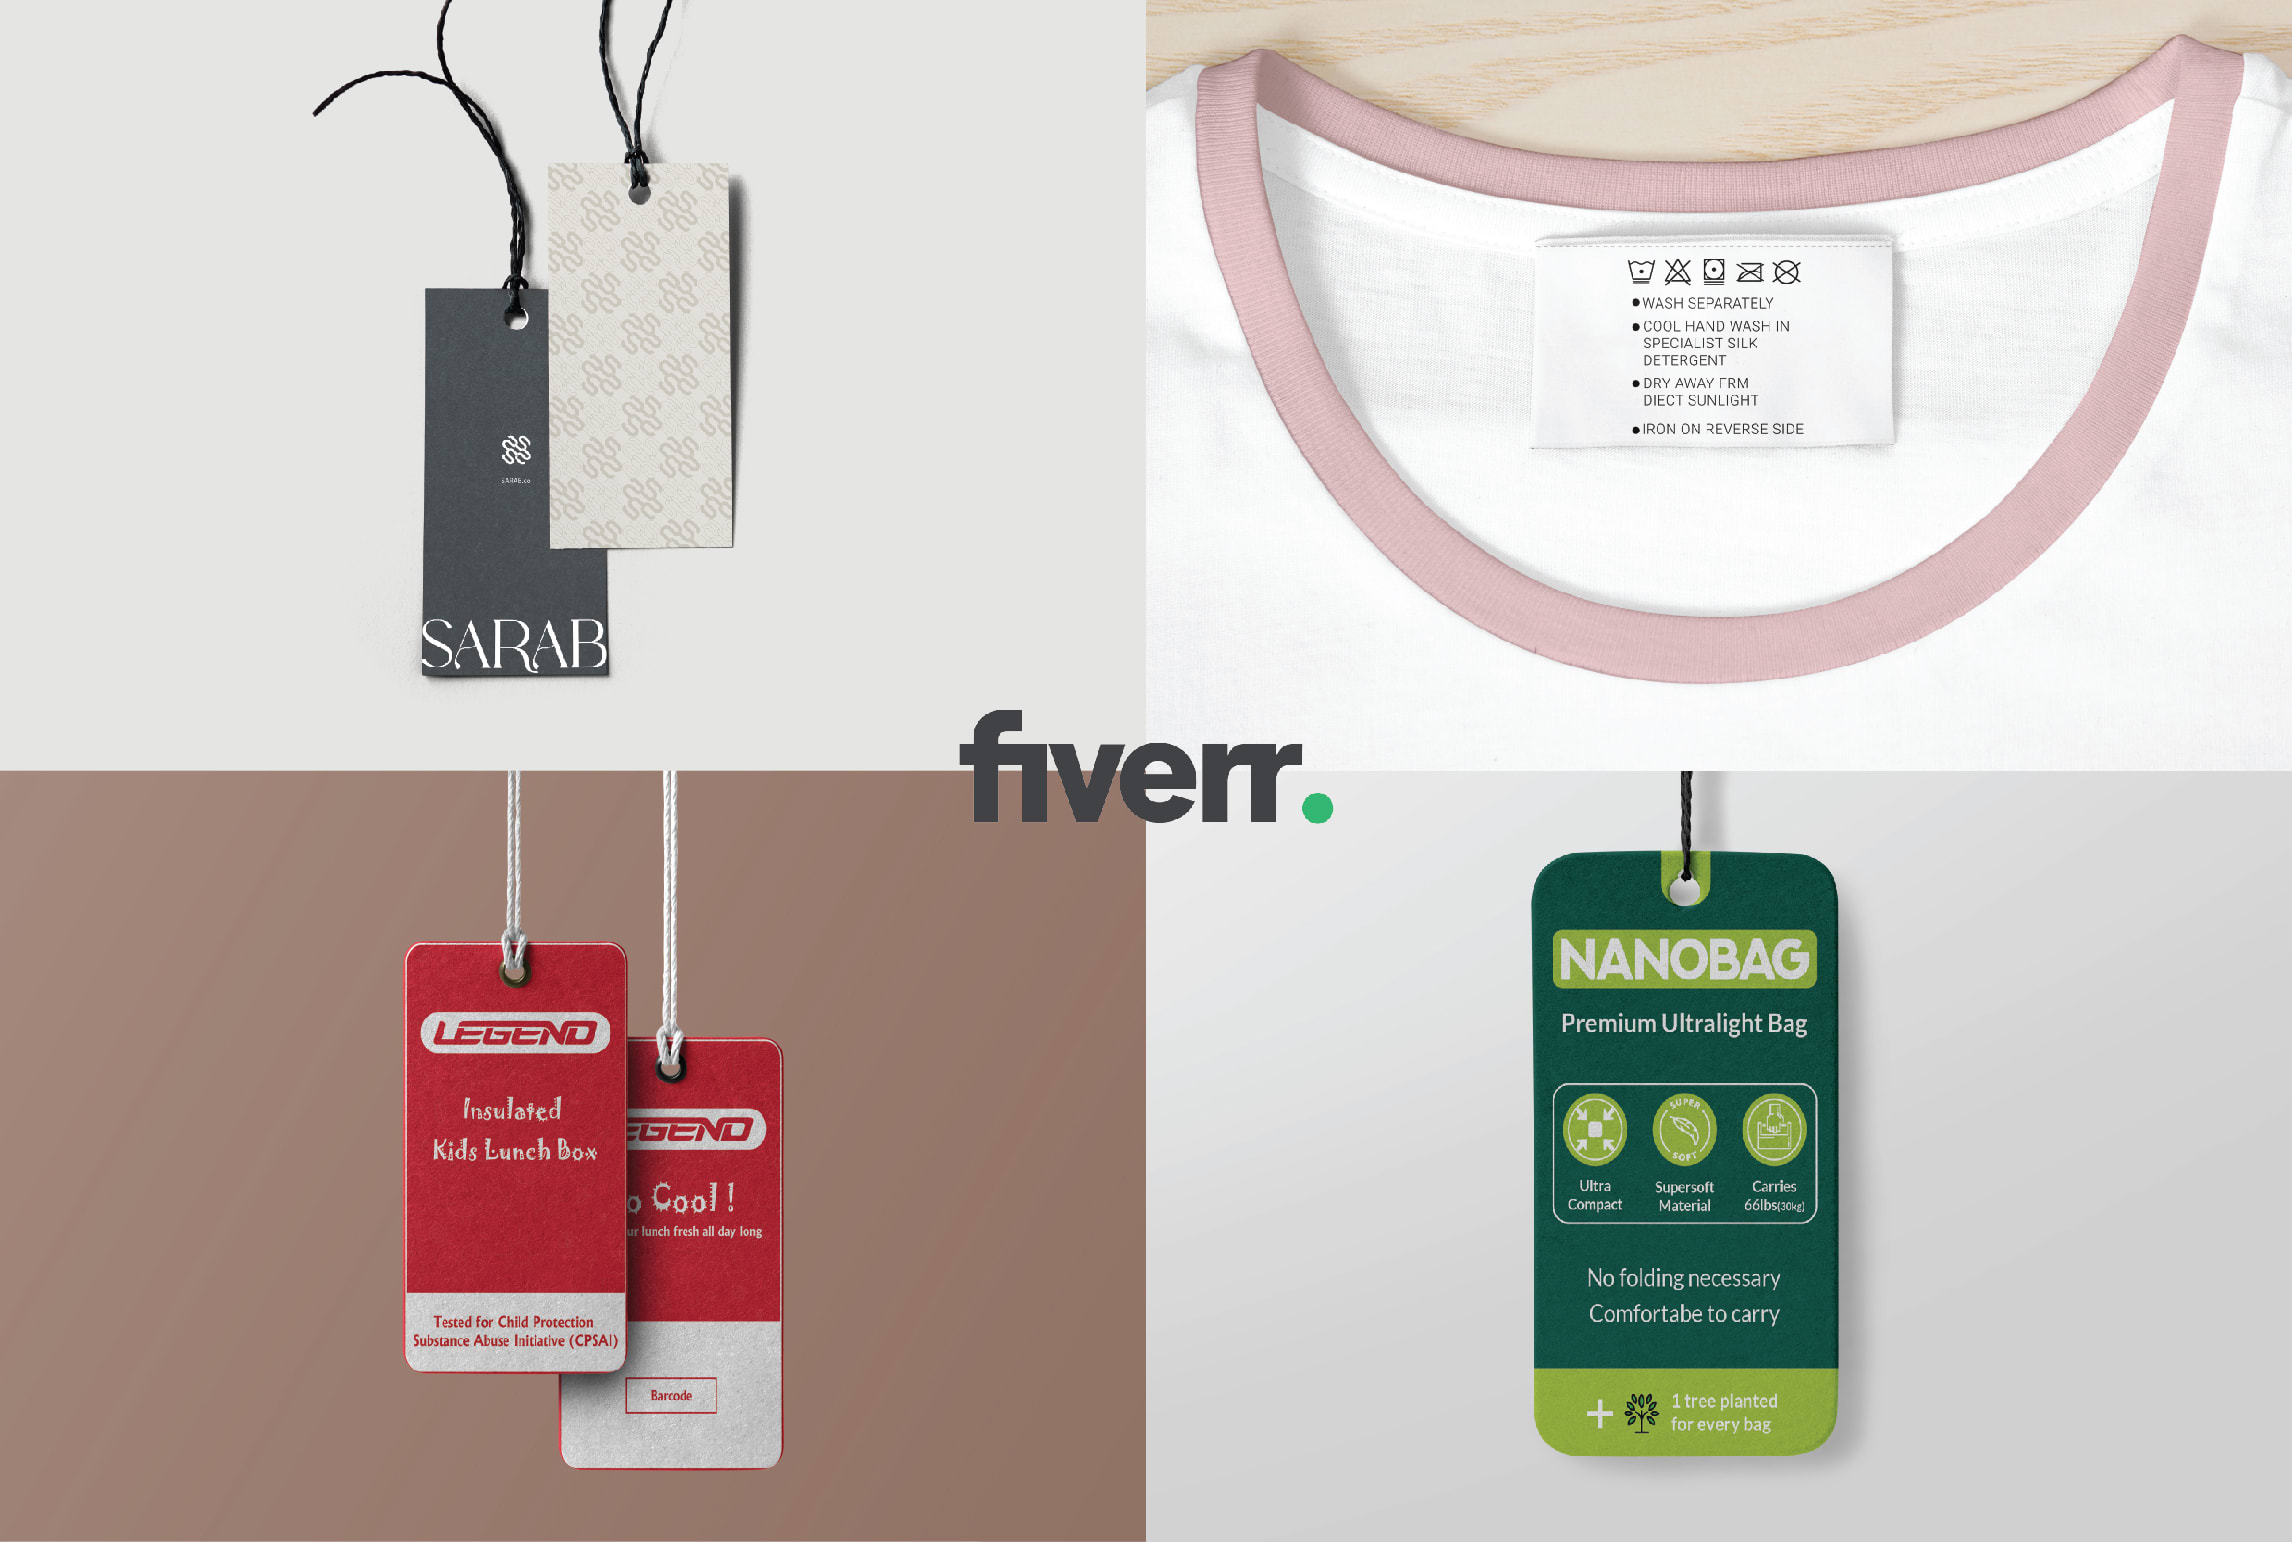 Fascinating hang tags and clothing labels by Designer_masud0